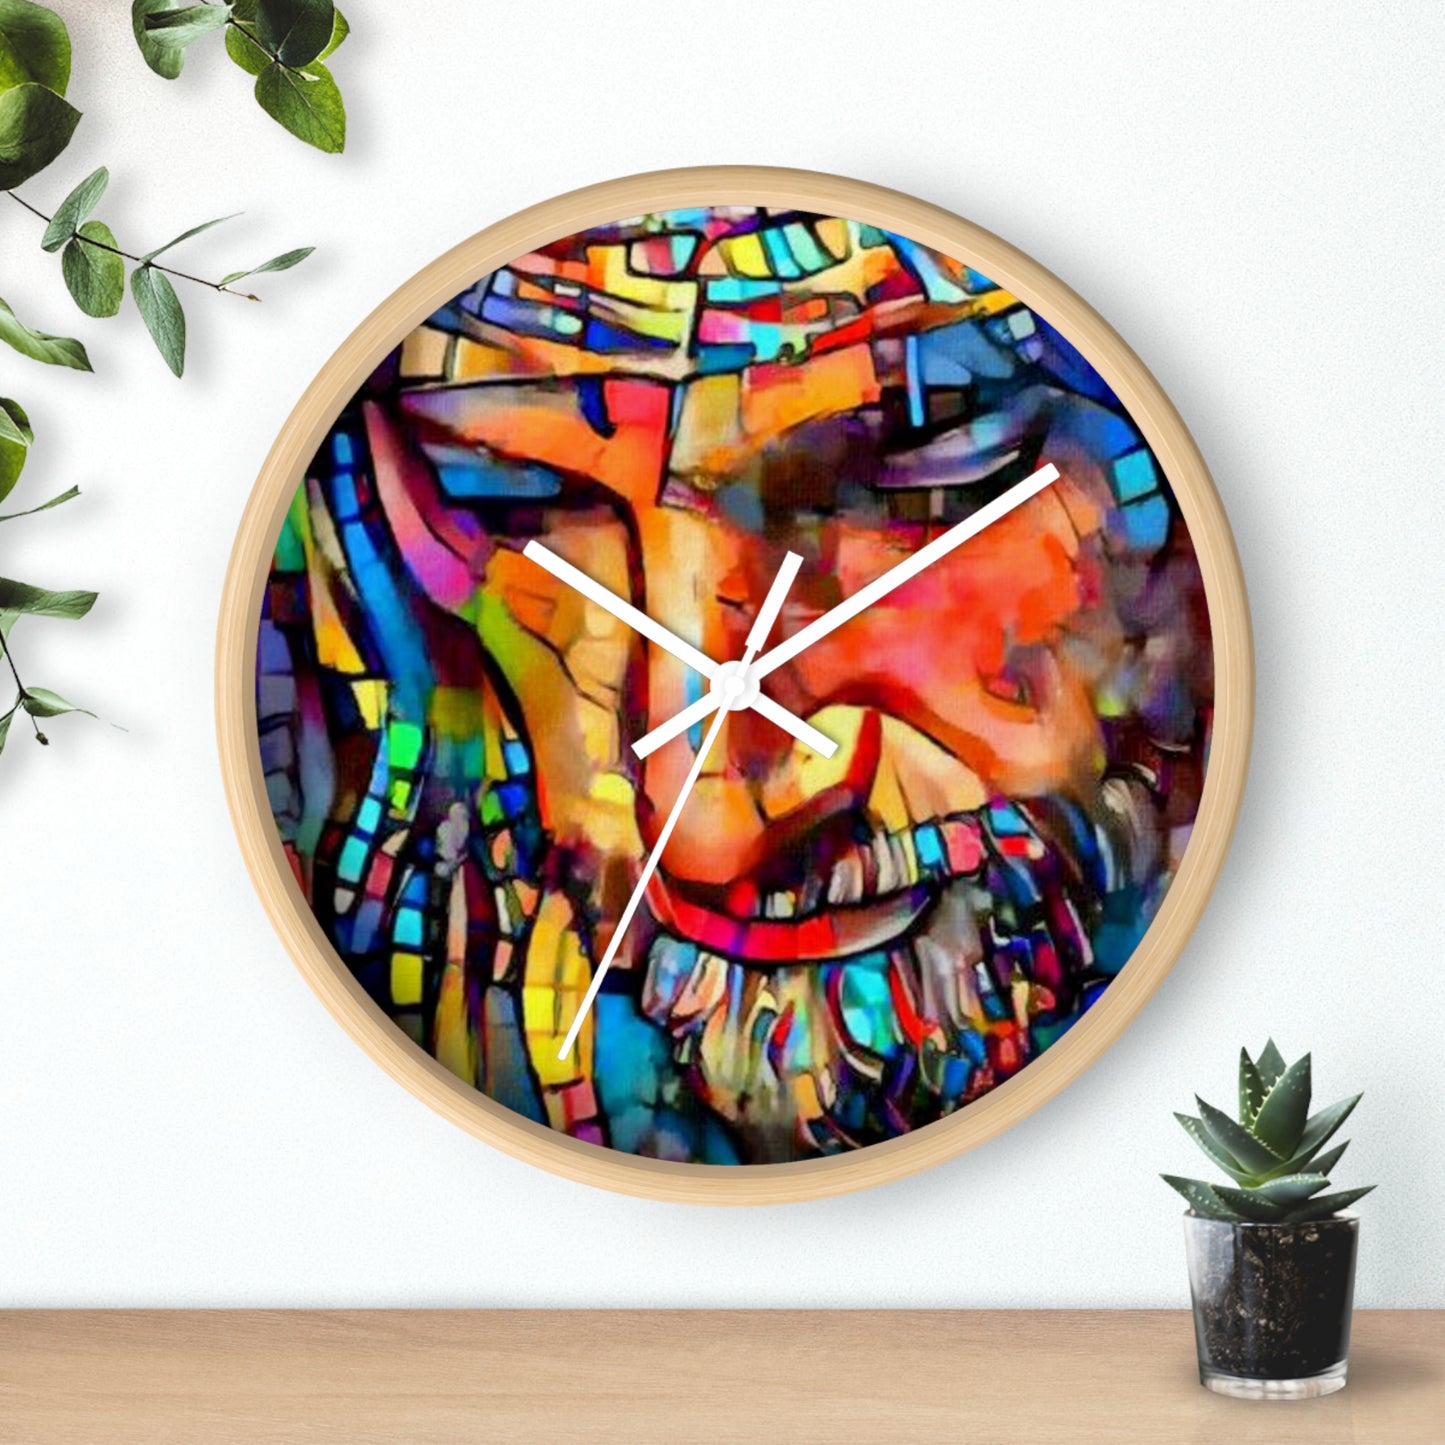 Jesus Wall Clock